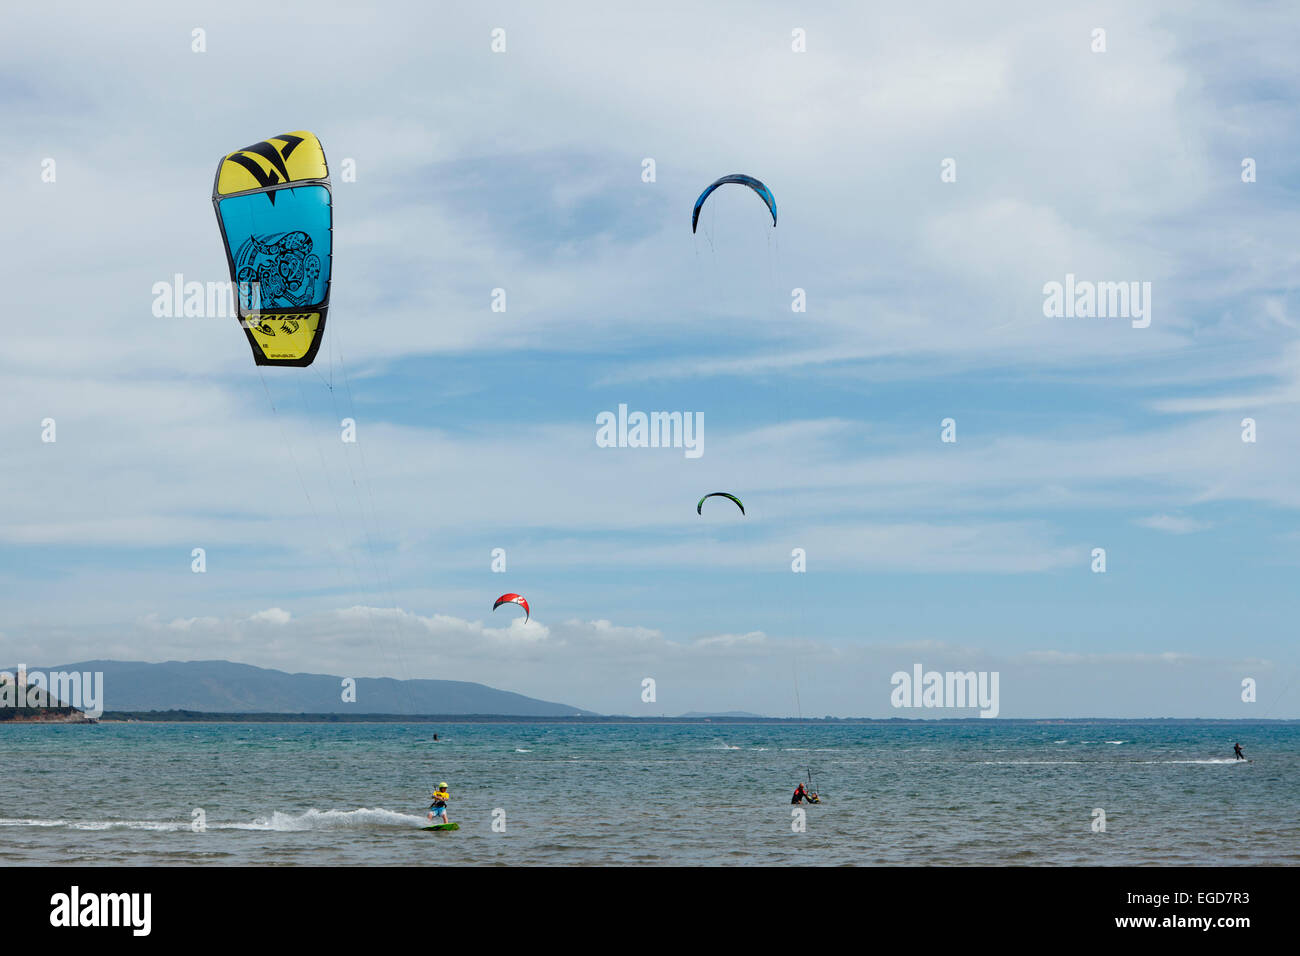 People kitesurfing, Golfo di Talamone, Mediterranean Sea, province of Grosseto, Tuscany, Italy, Europe Stock Photo